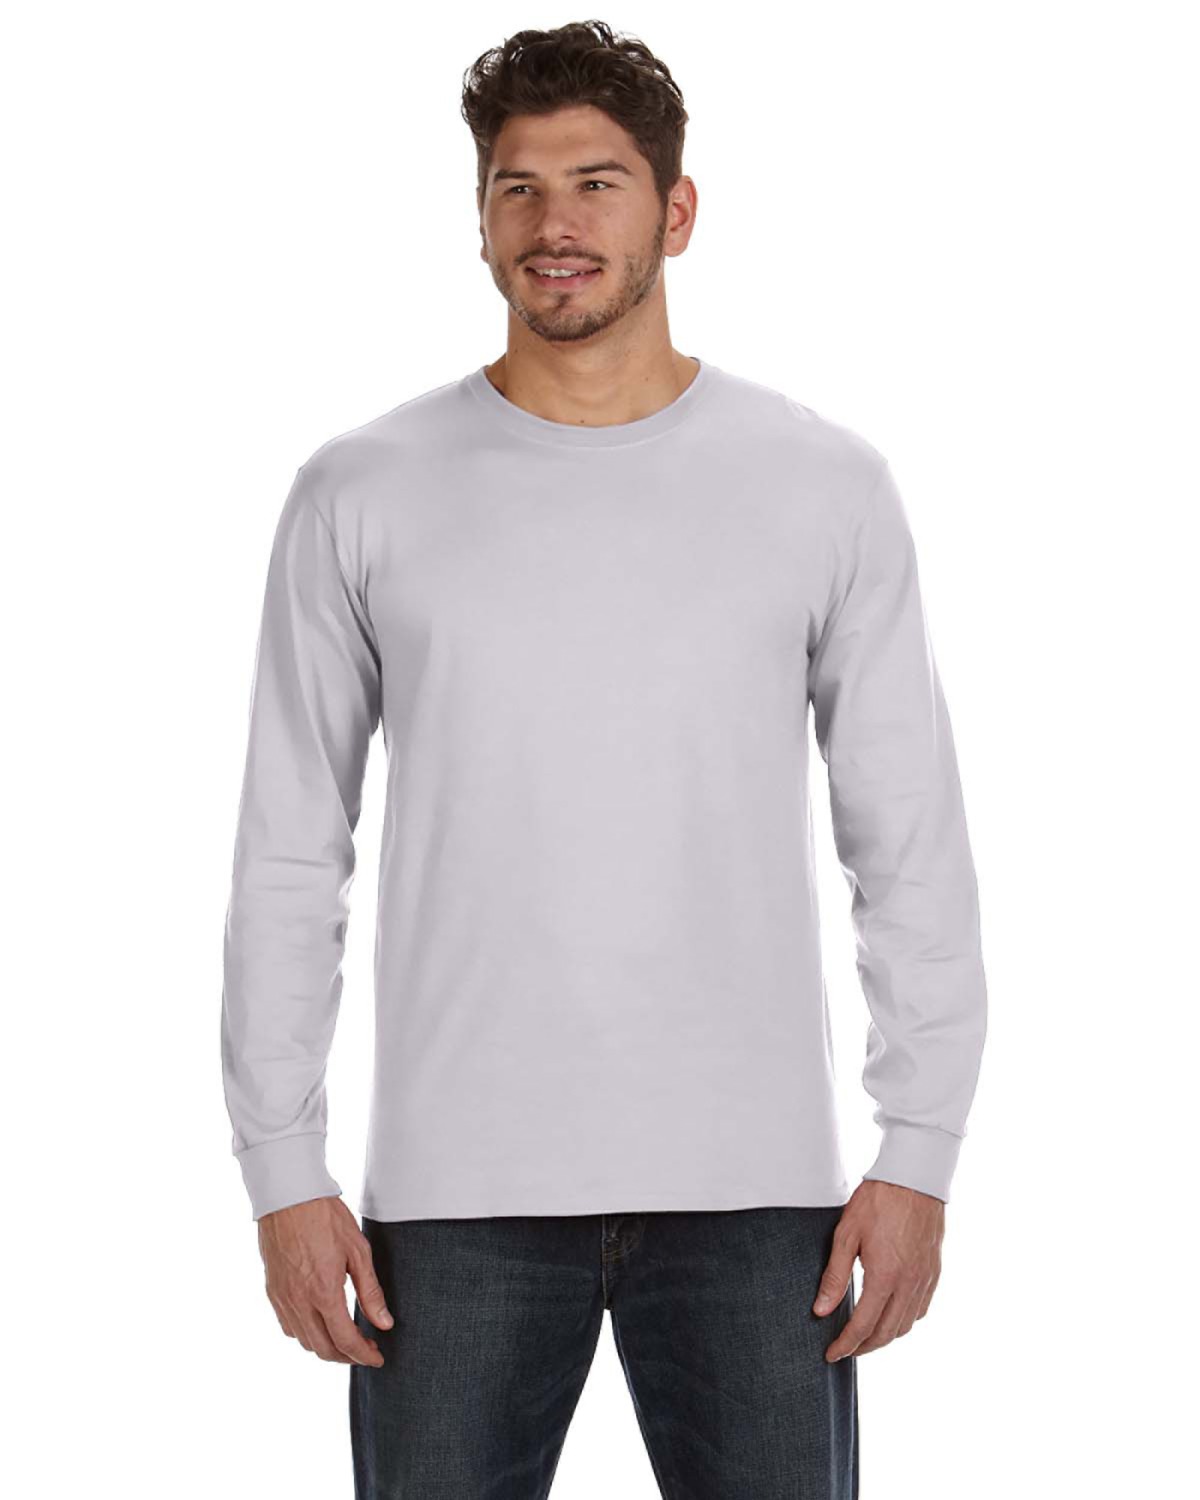 784AN Anvil Adult Midweight Long-Sleeve T-Shirt